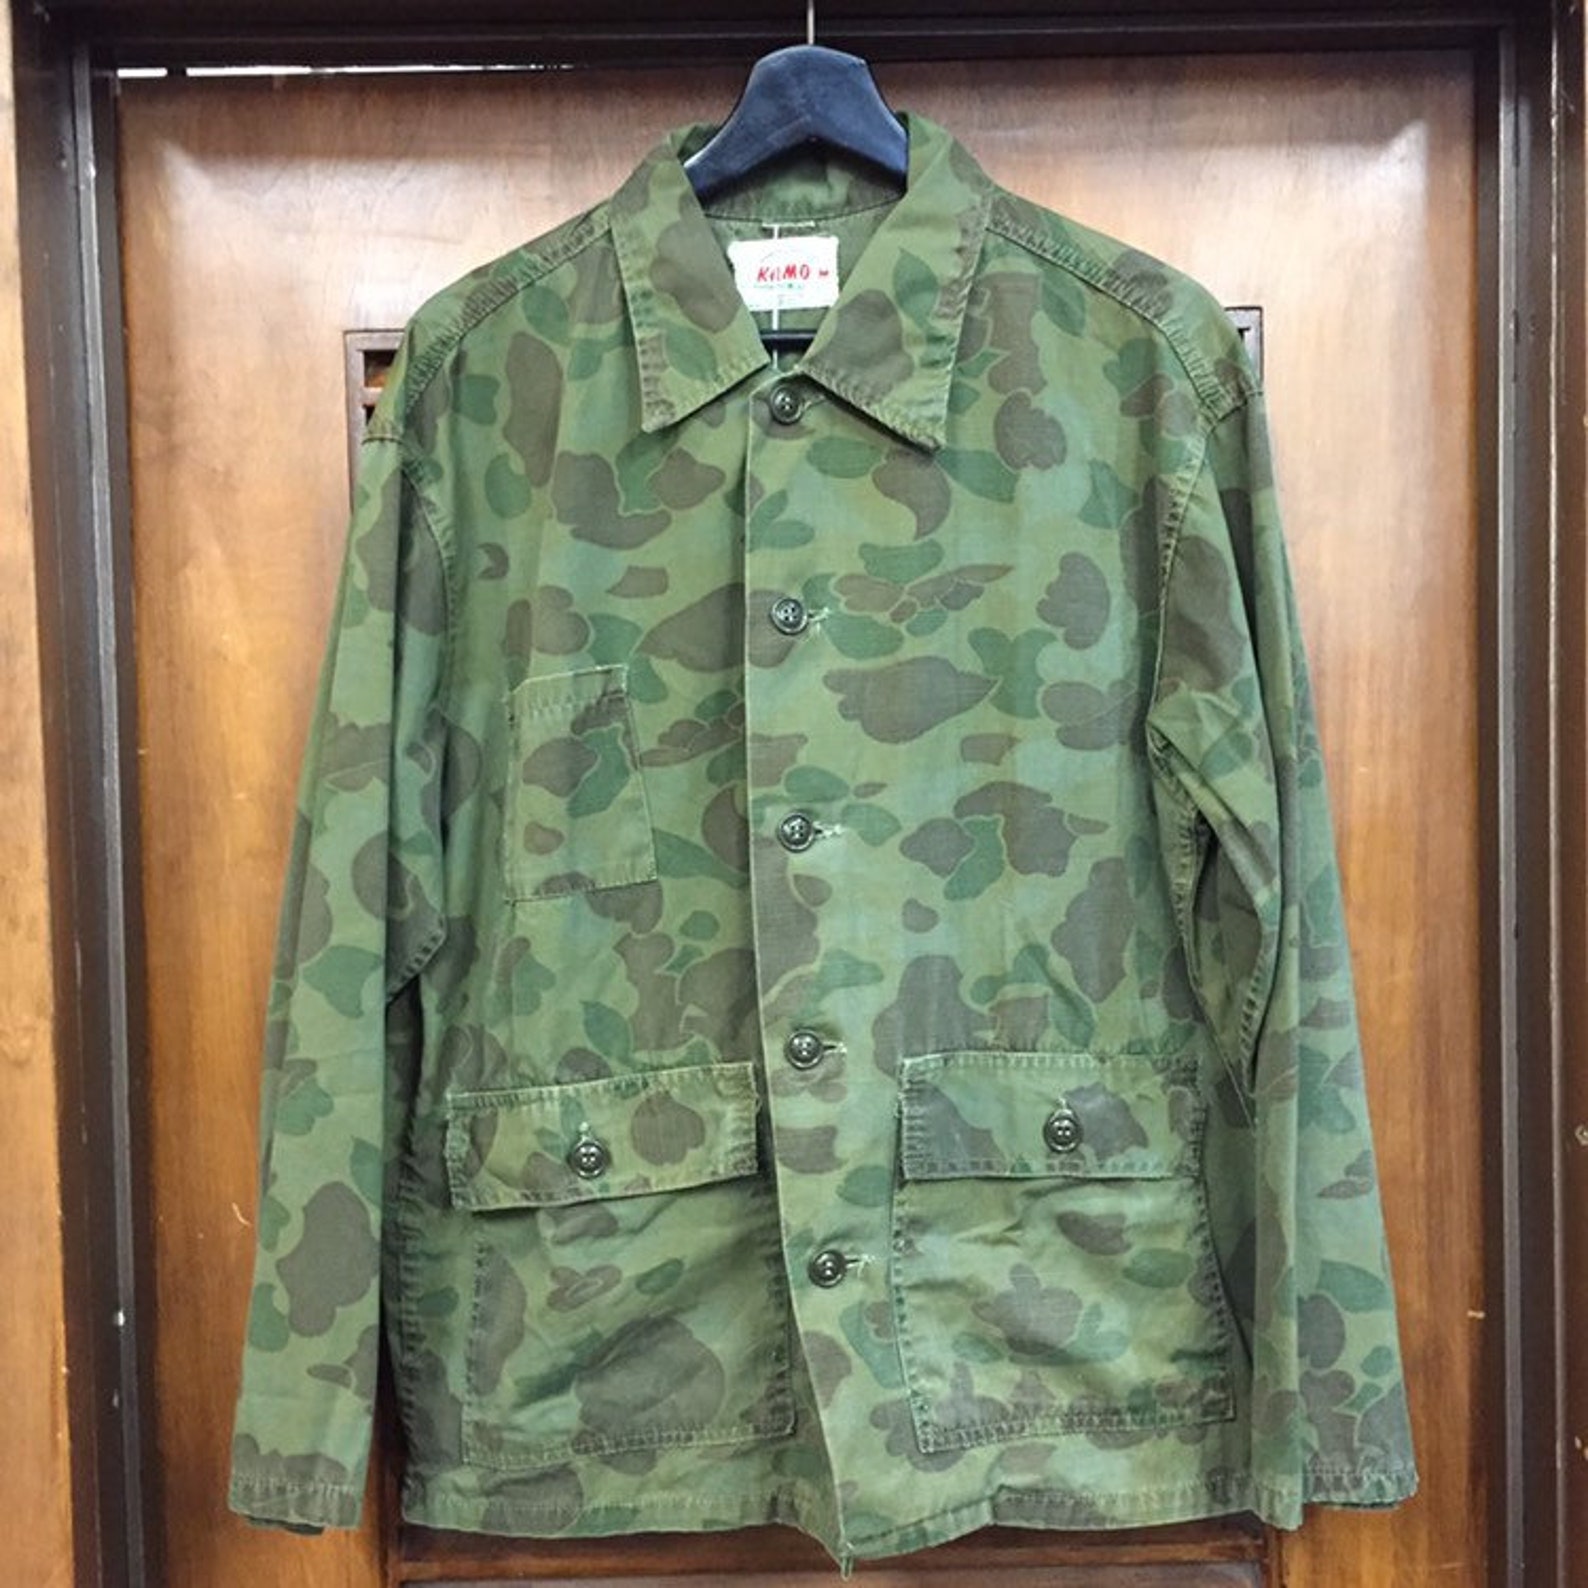 Vintage 1960s Camouflage Hunting Jacket Kamo Vintage Top - Etsy